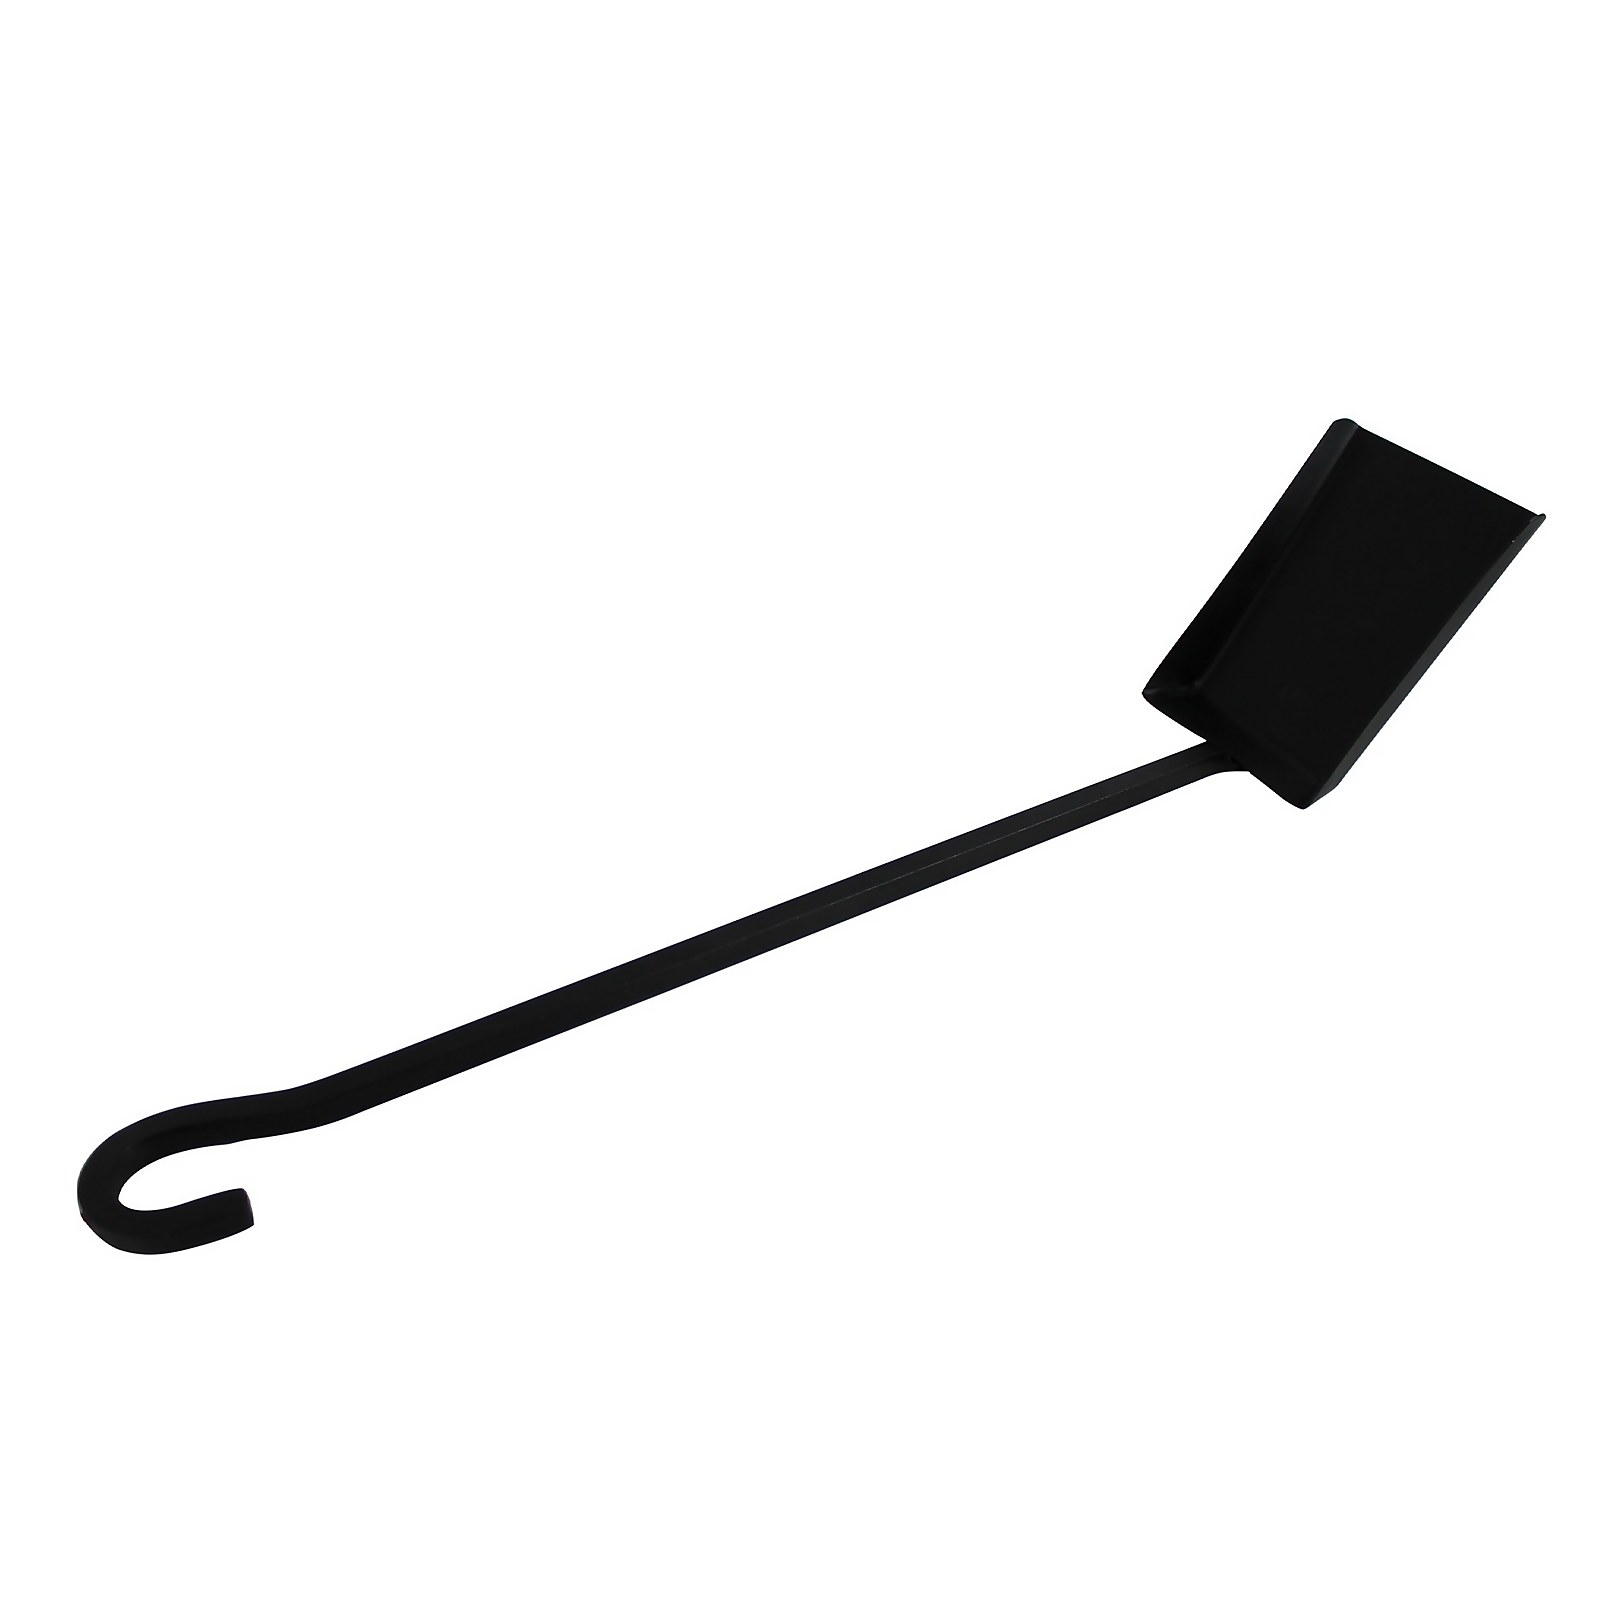 Photo of Metal Long Handle Fireplace Shovel Tool - Black